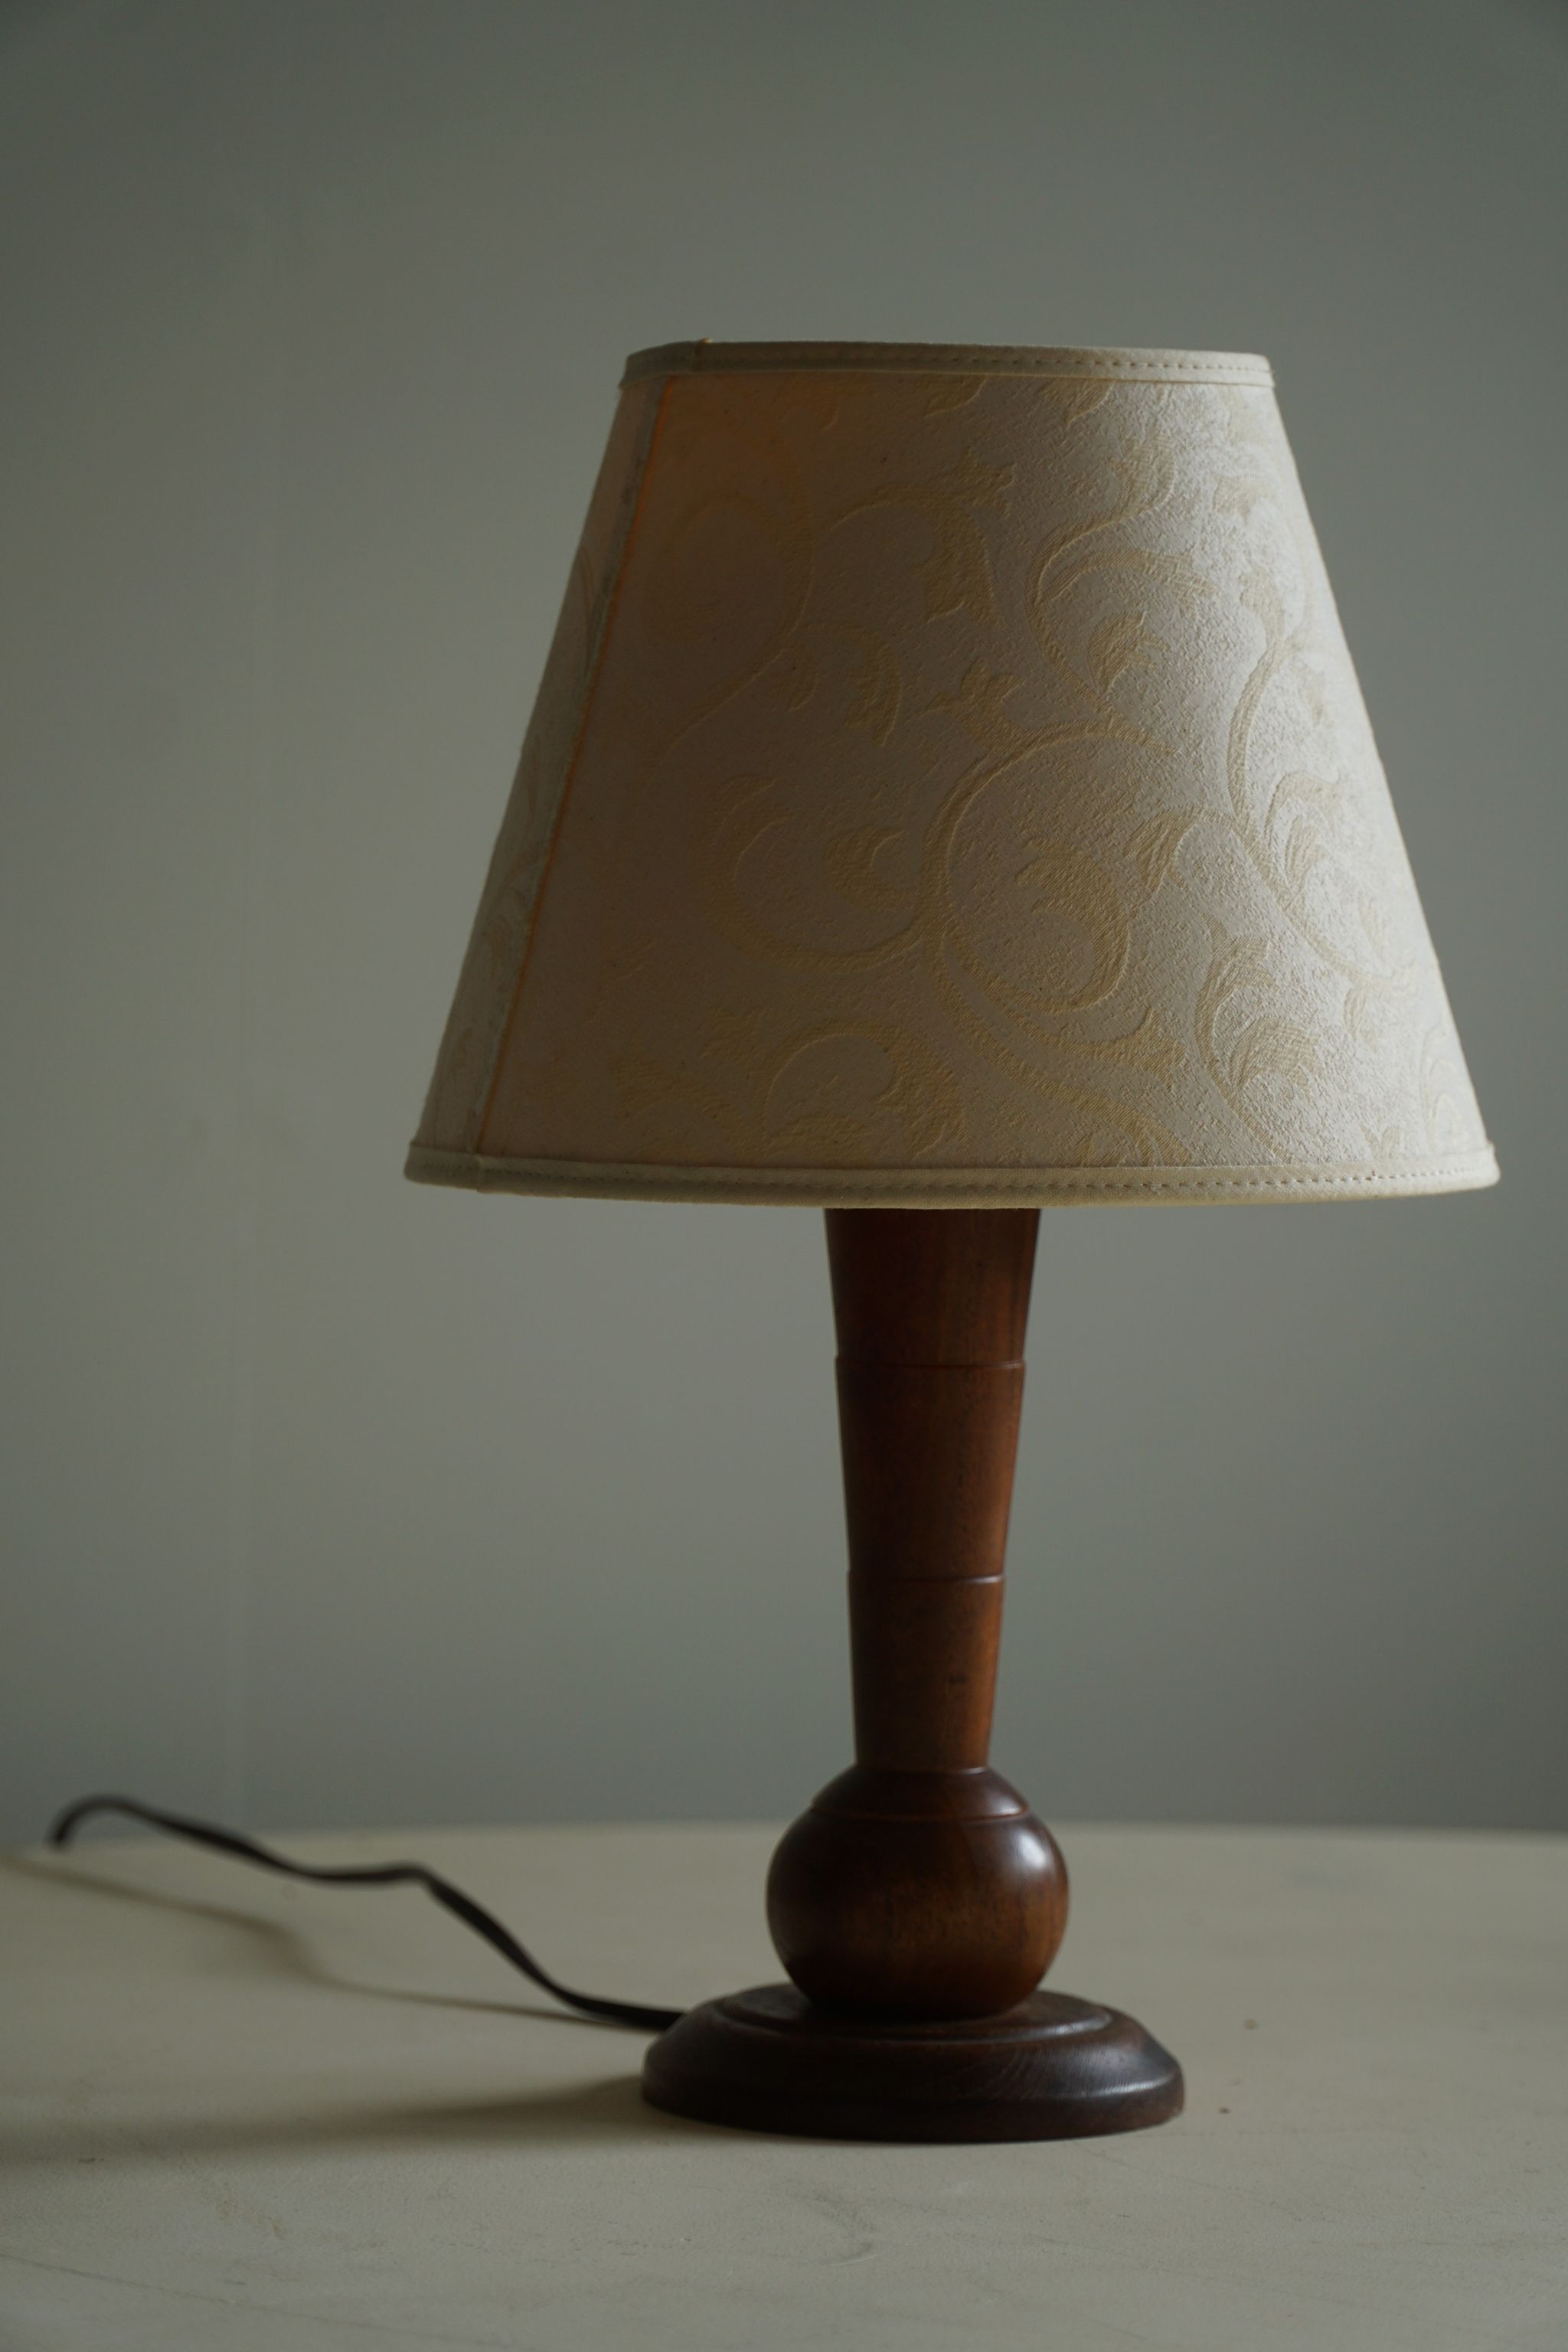 Sculptural Wooden Teak Art Deco Table Lamp, Danish Modern, 1940s For Sale 1